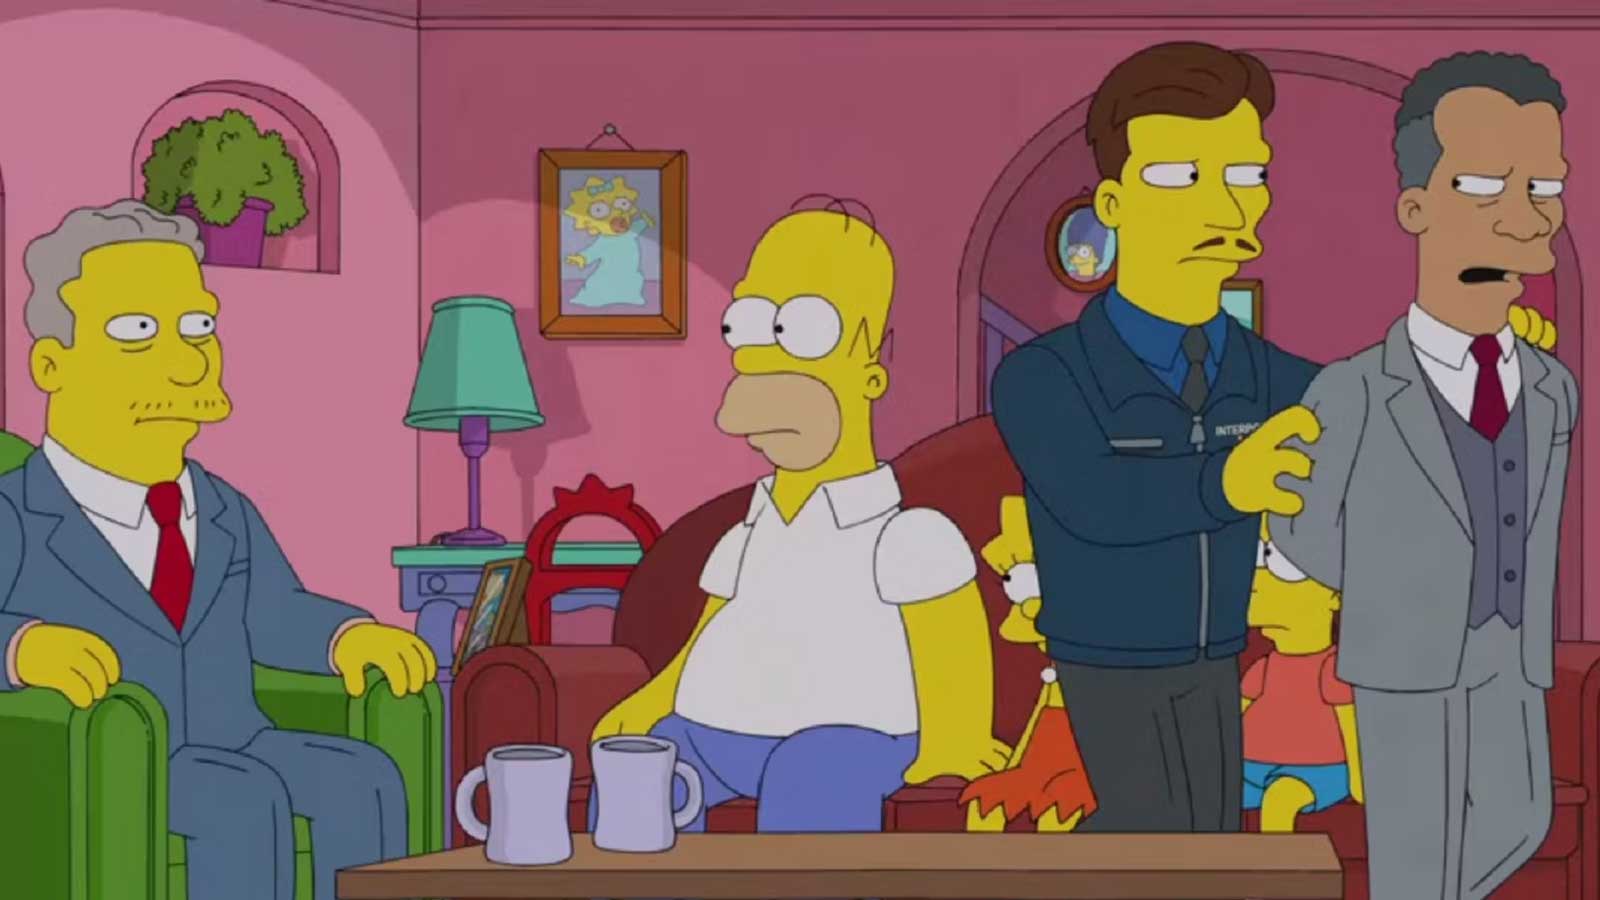 پیشگویی فساد فیفا در سریال The Simpsons (انیمیشن سیمپسون ها)